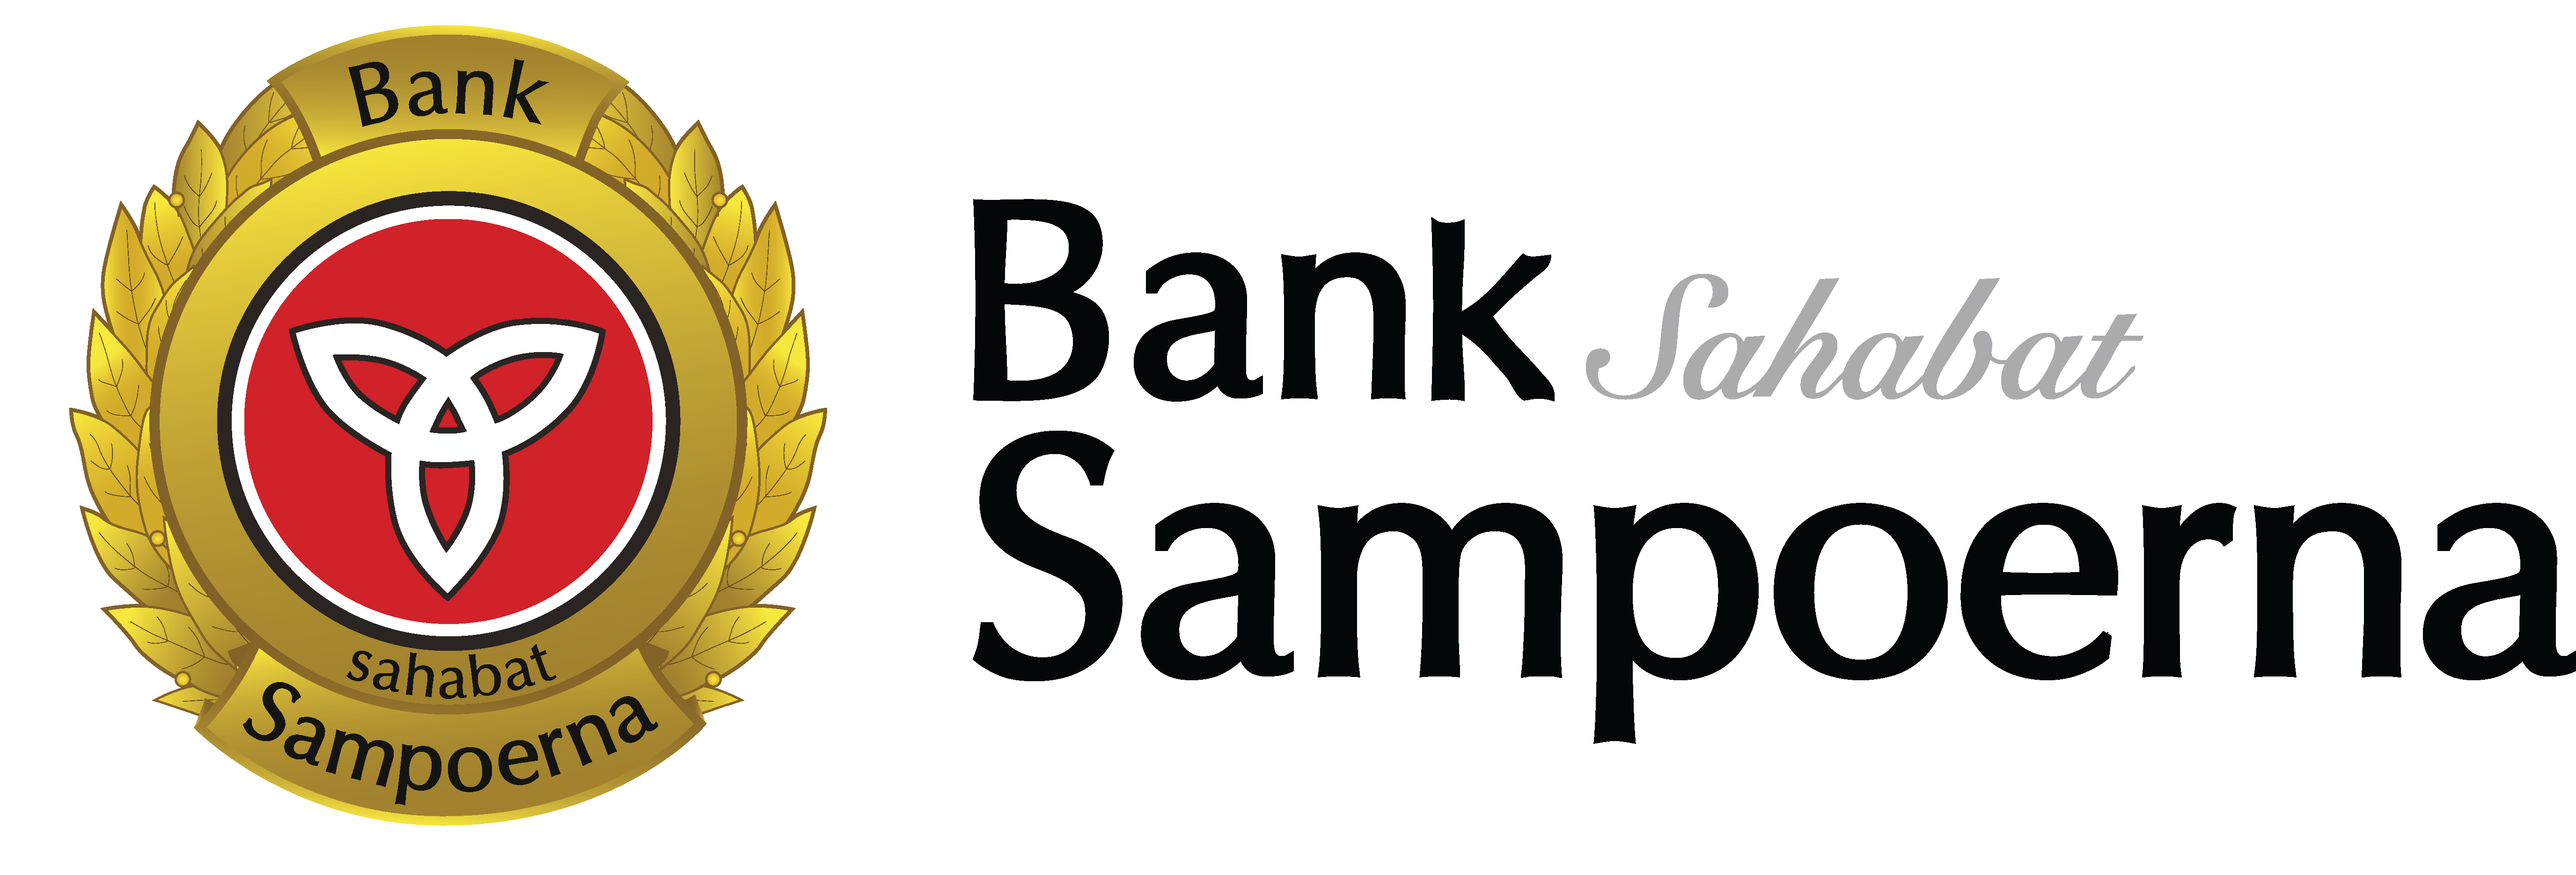 Bank Sampoerna